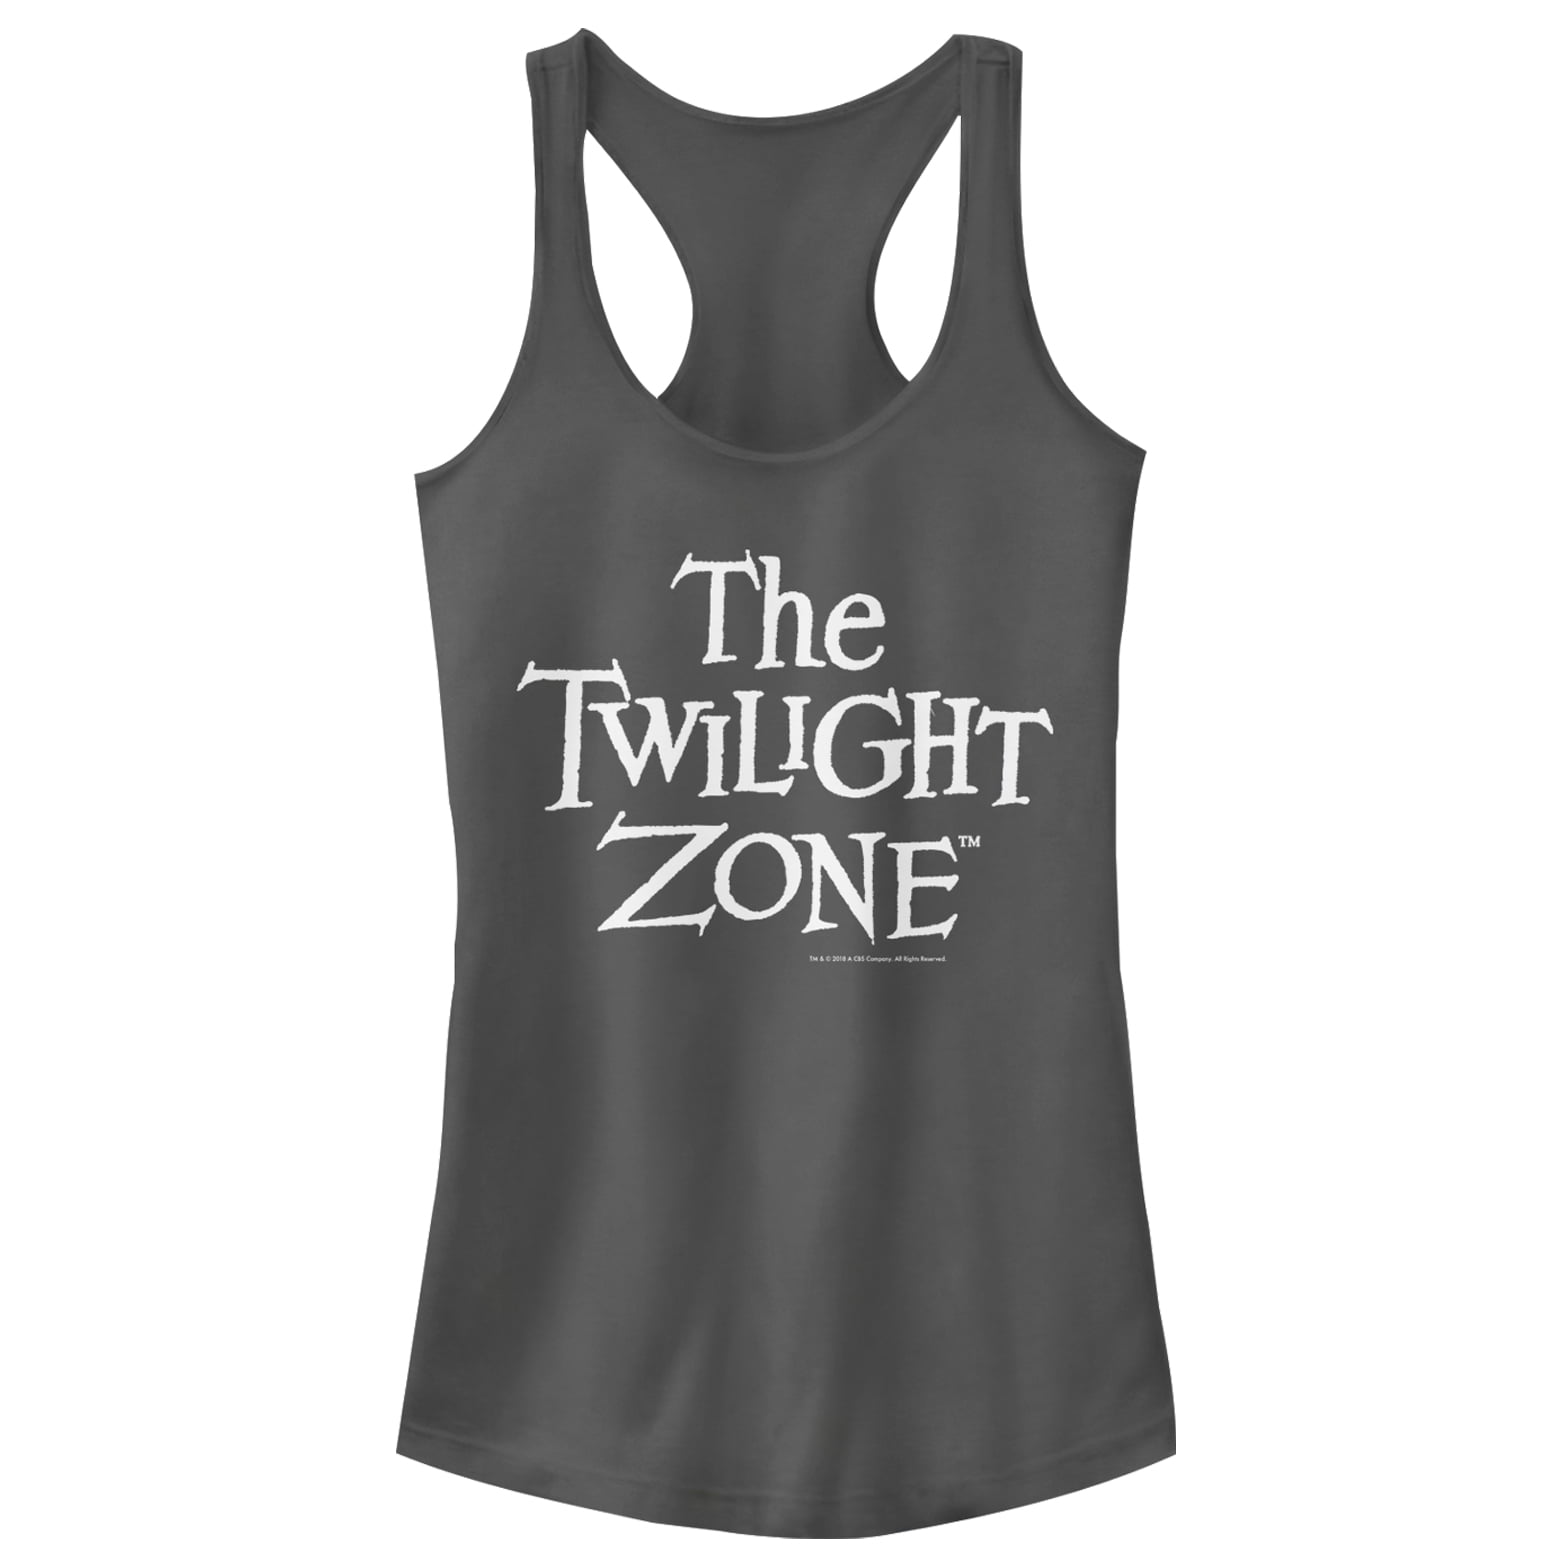 The Twilight Zone Juniors Living Doll Episode Racerback Tank Top